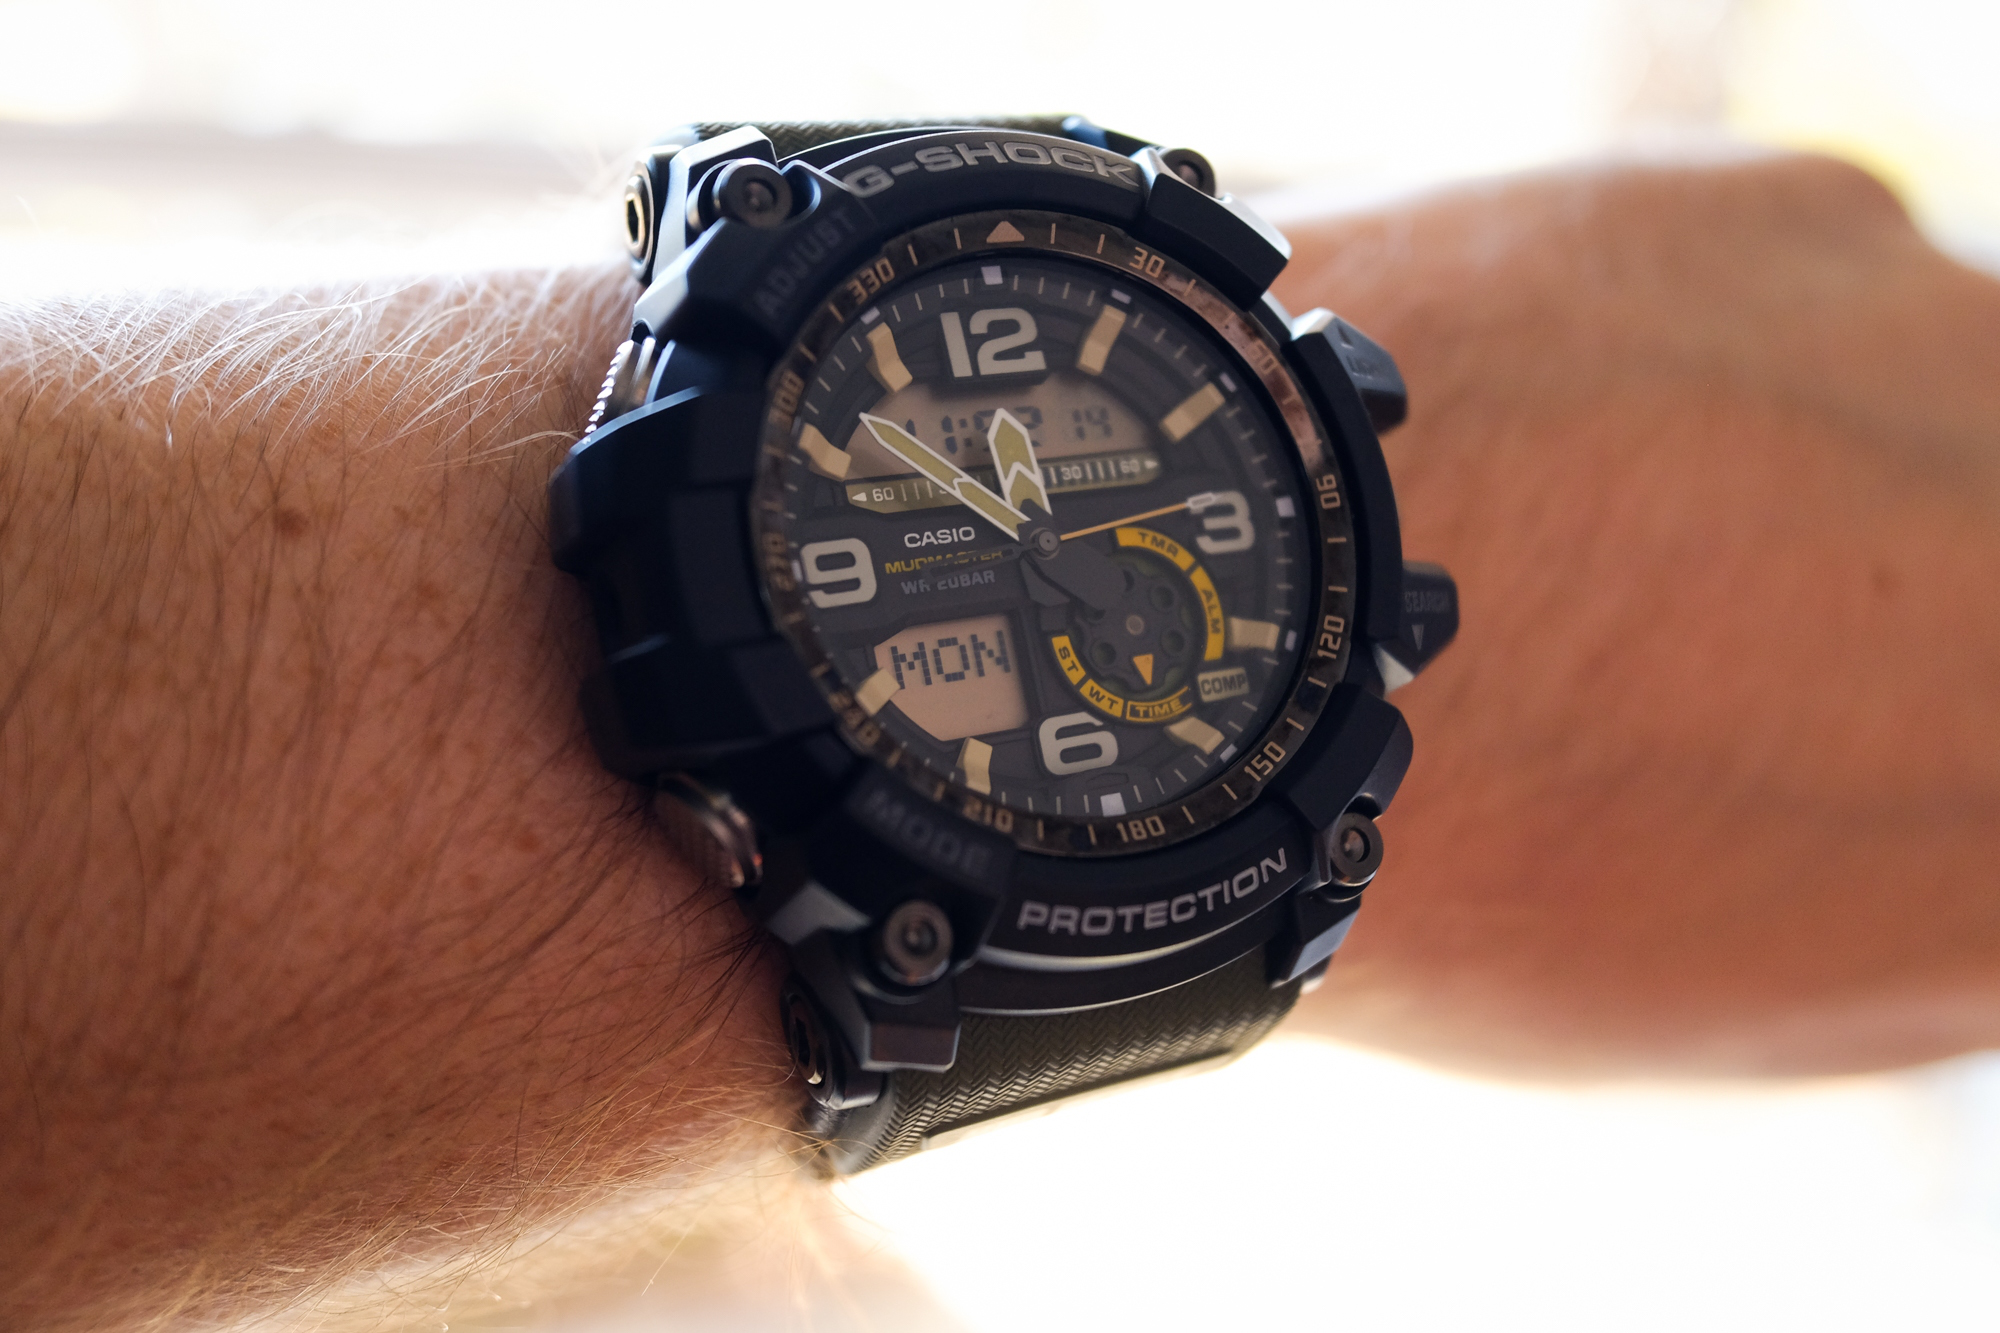 REVIEW: Casio's Mudmaster GG-1000 a G-Shock watch designed ...